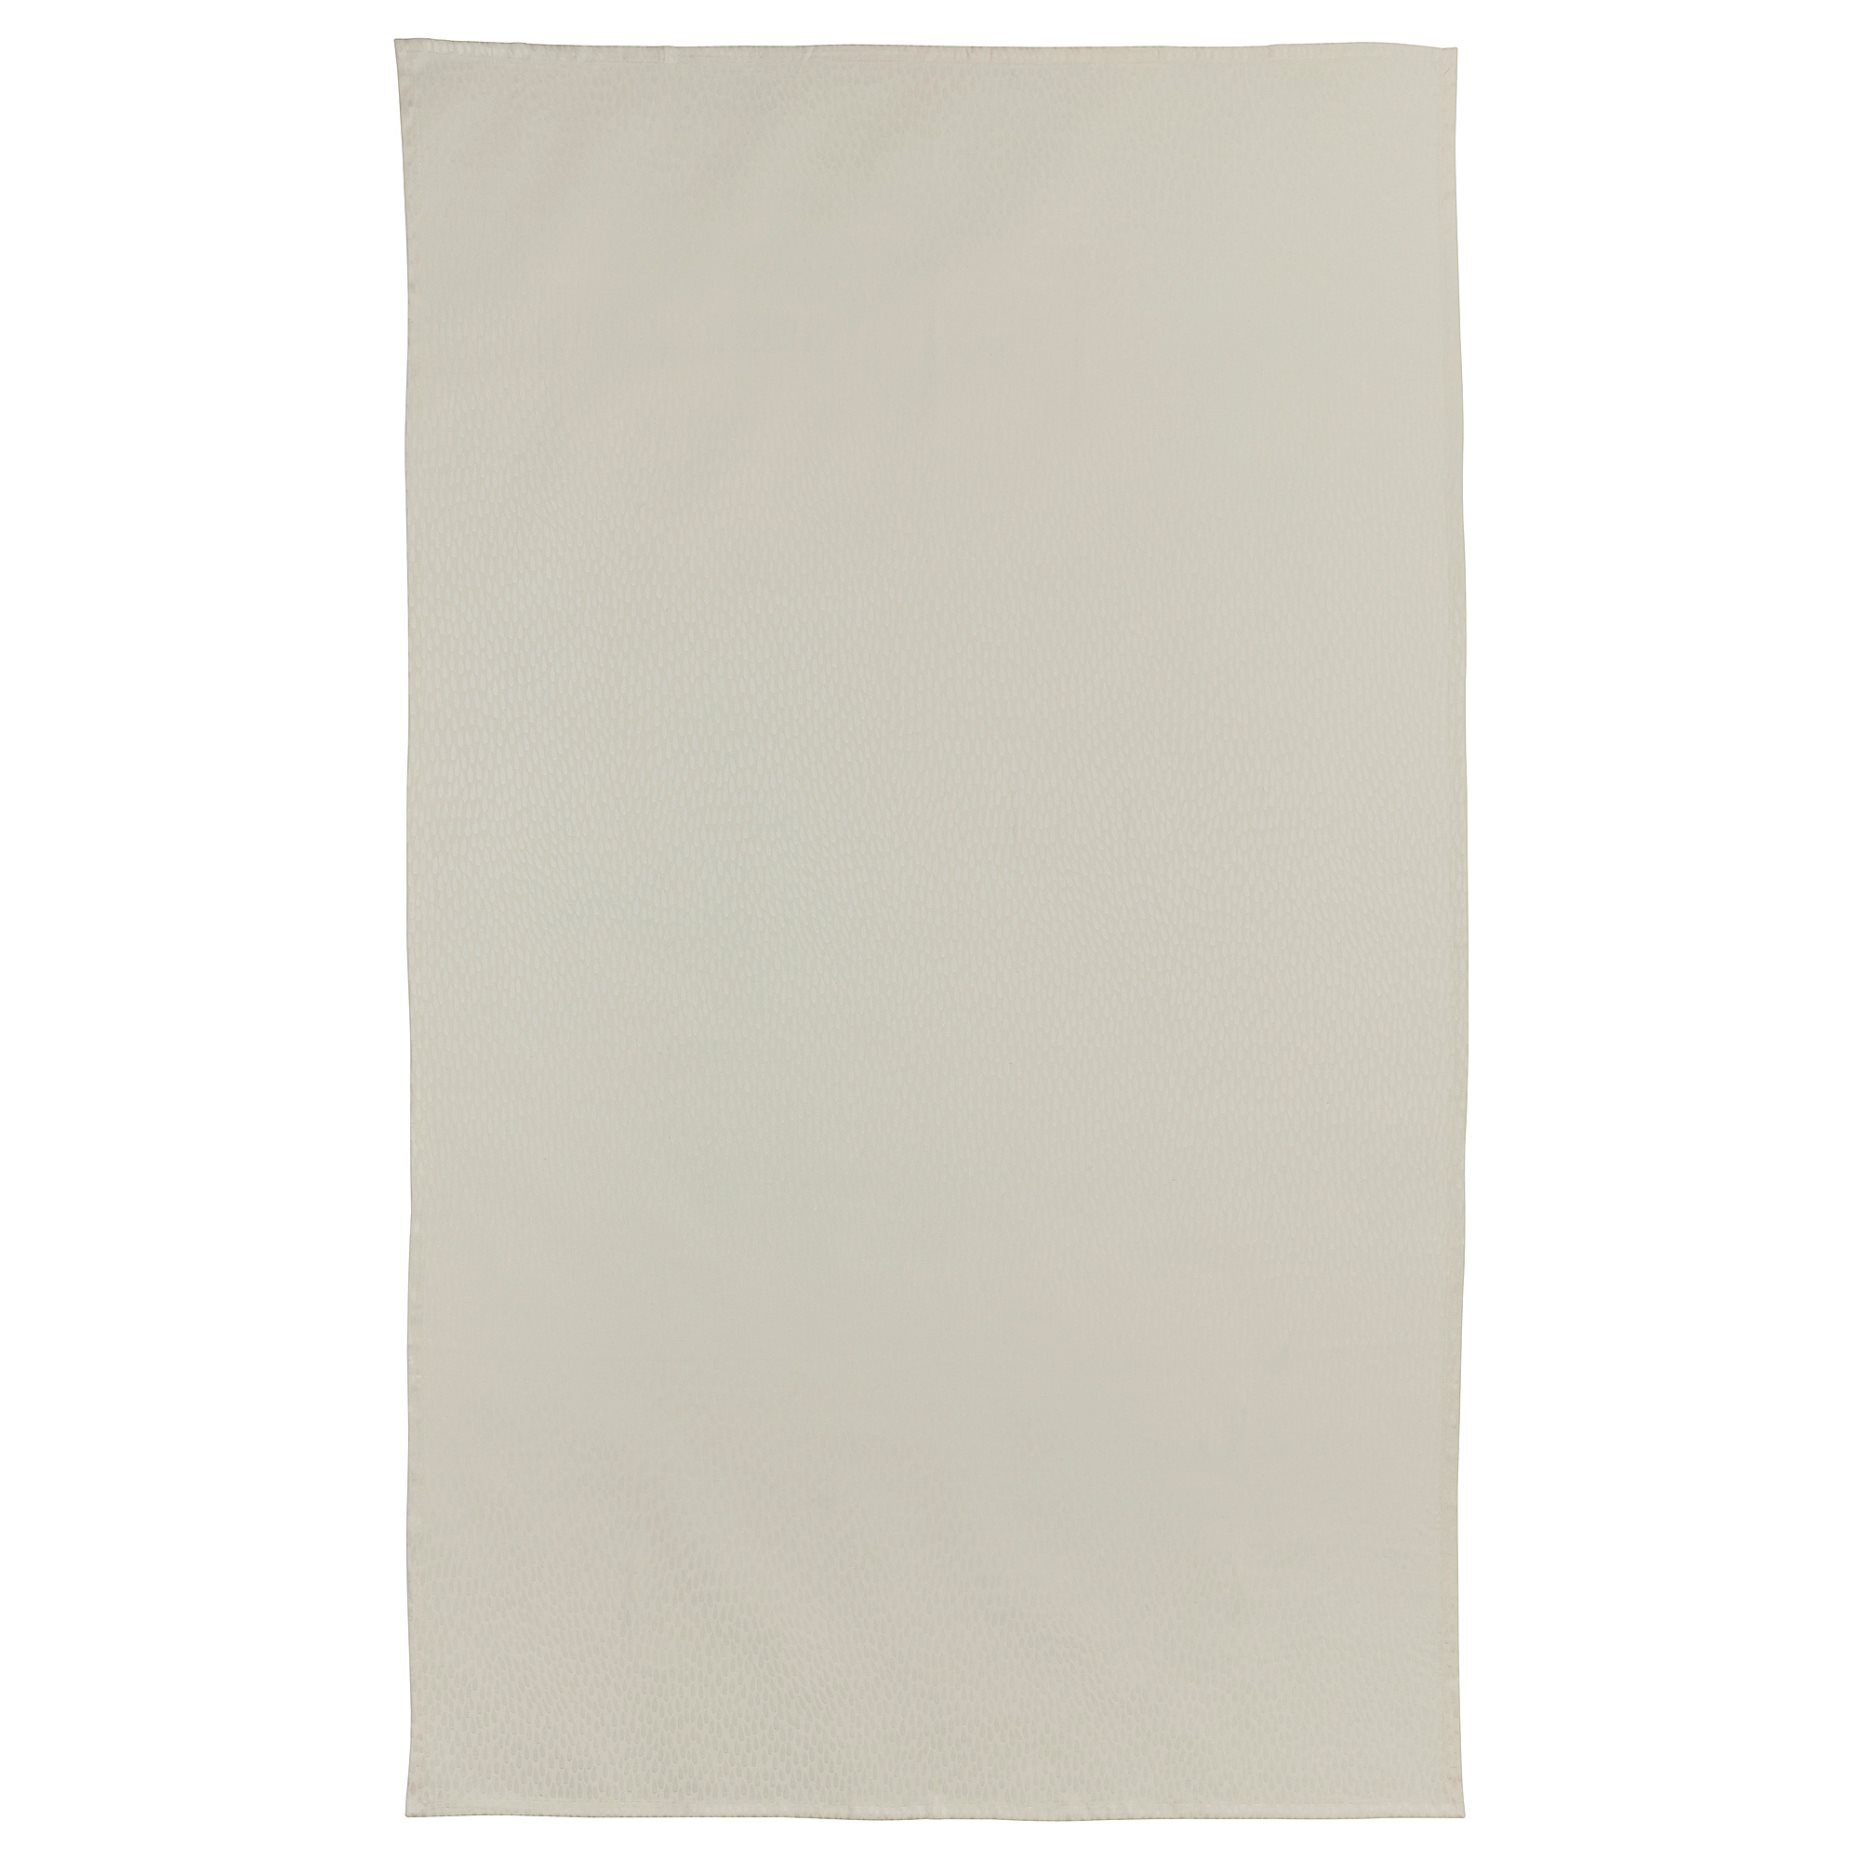 LIGUSTER, τραπεζομάντηλο με σχέδια, 145x240 cm, 505.681.13